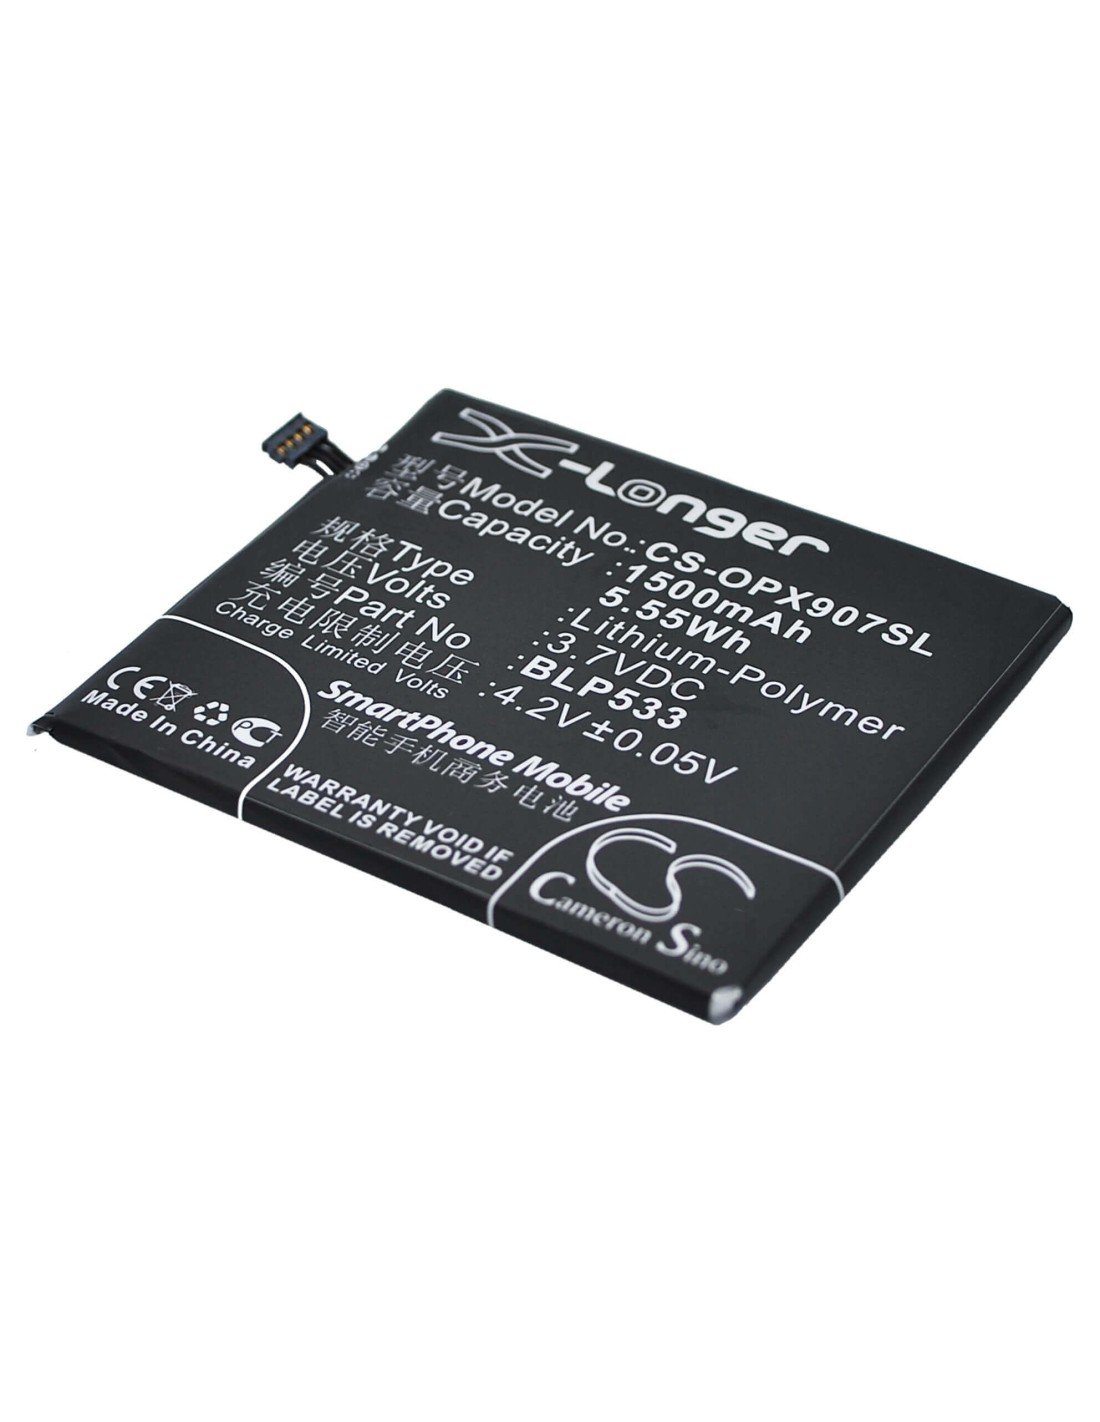 Battery for OPPO Finder, X907 3.7V, 1500mAh - 5.55Wh